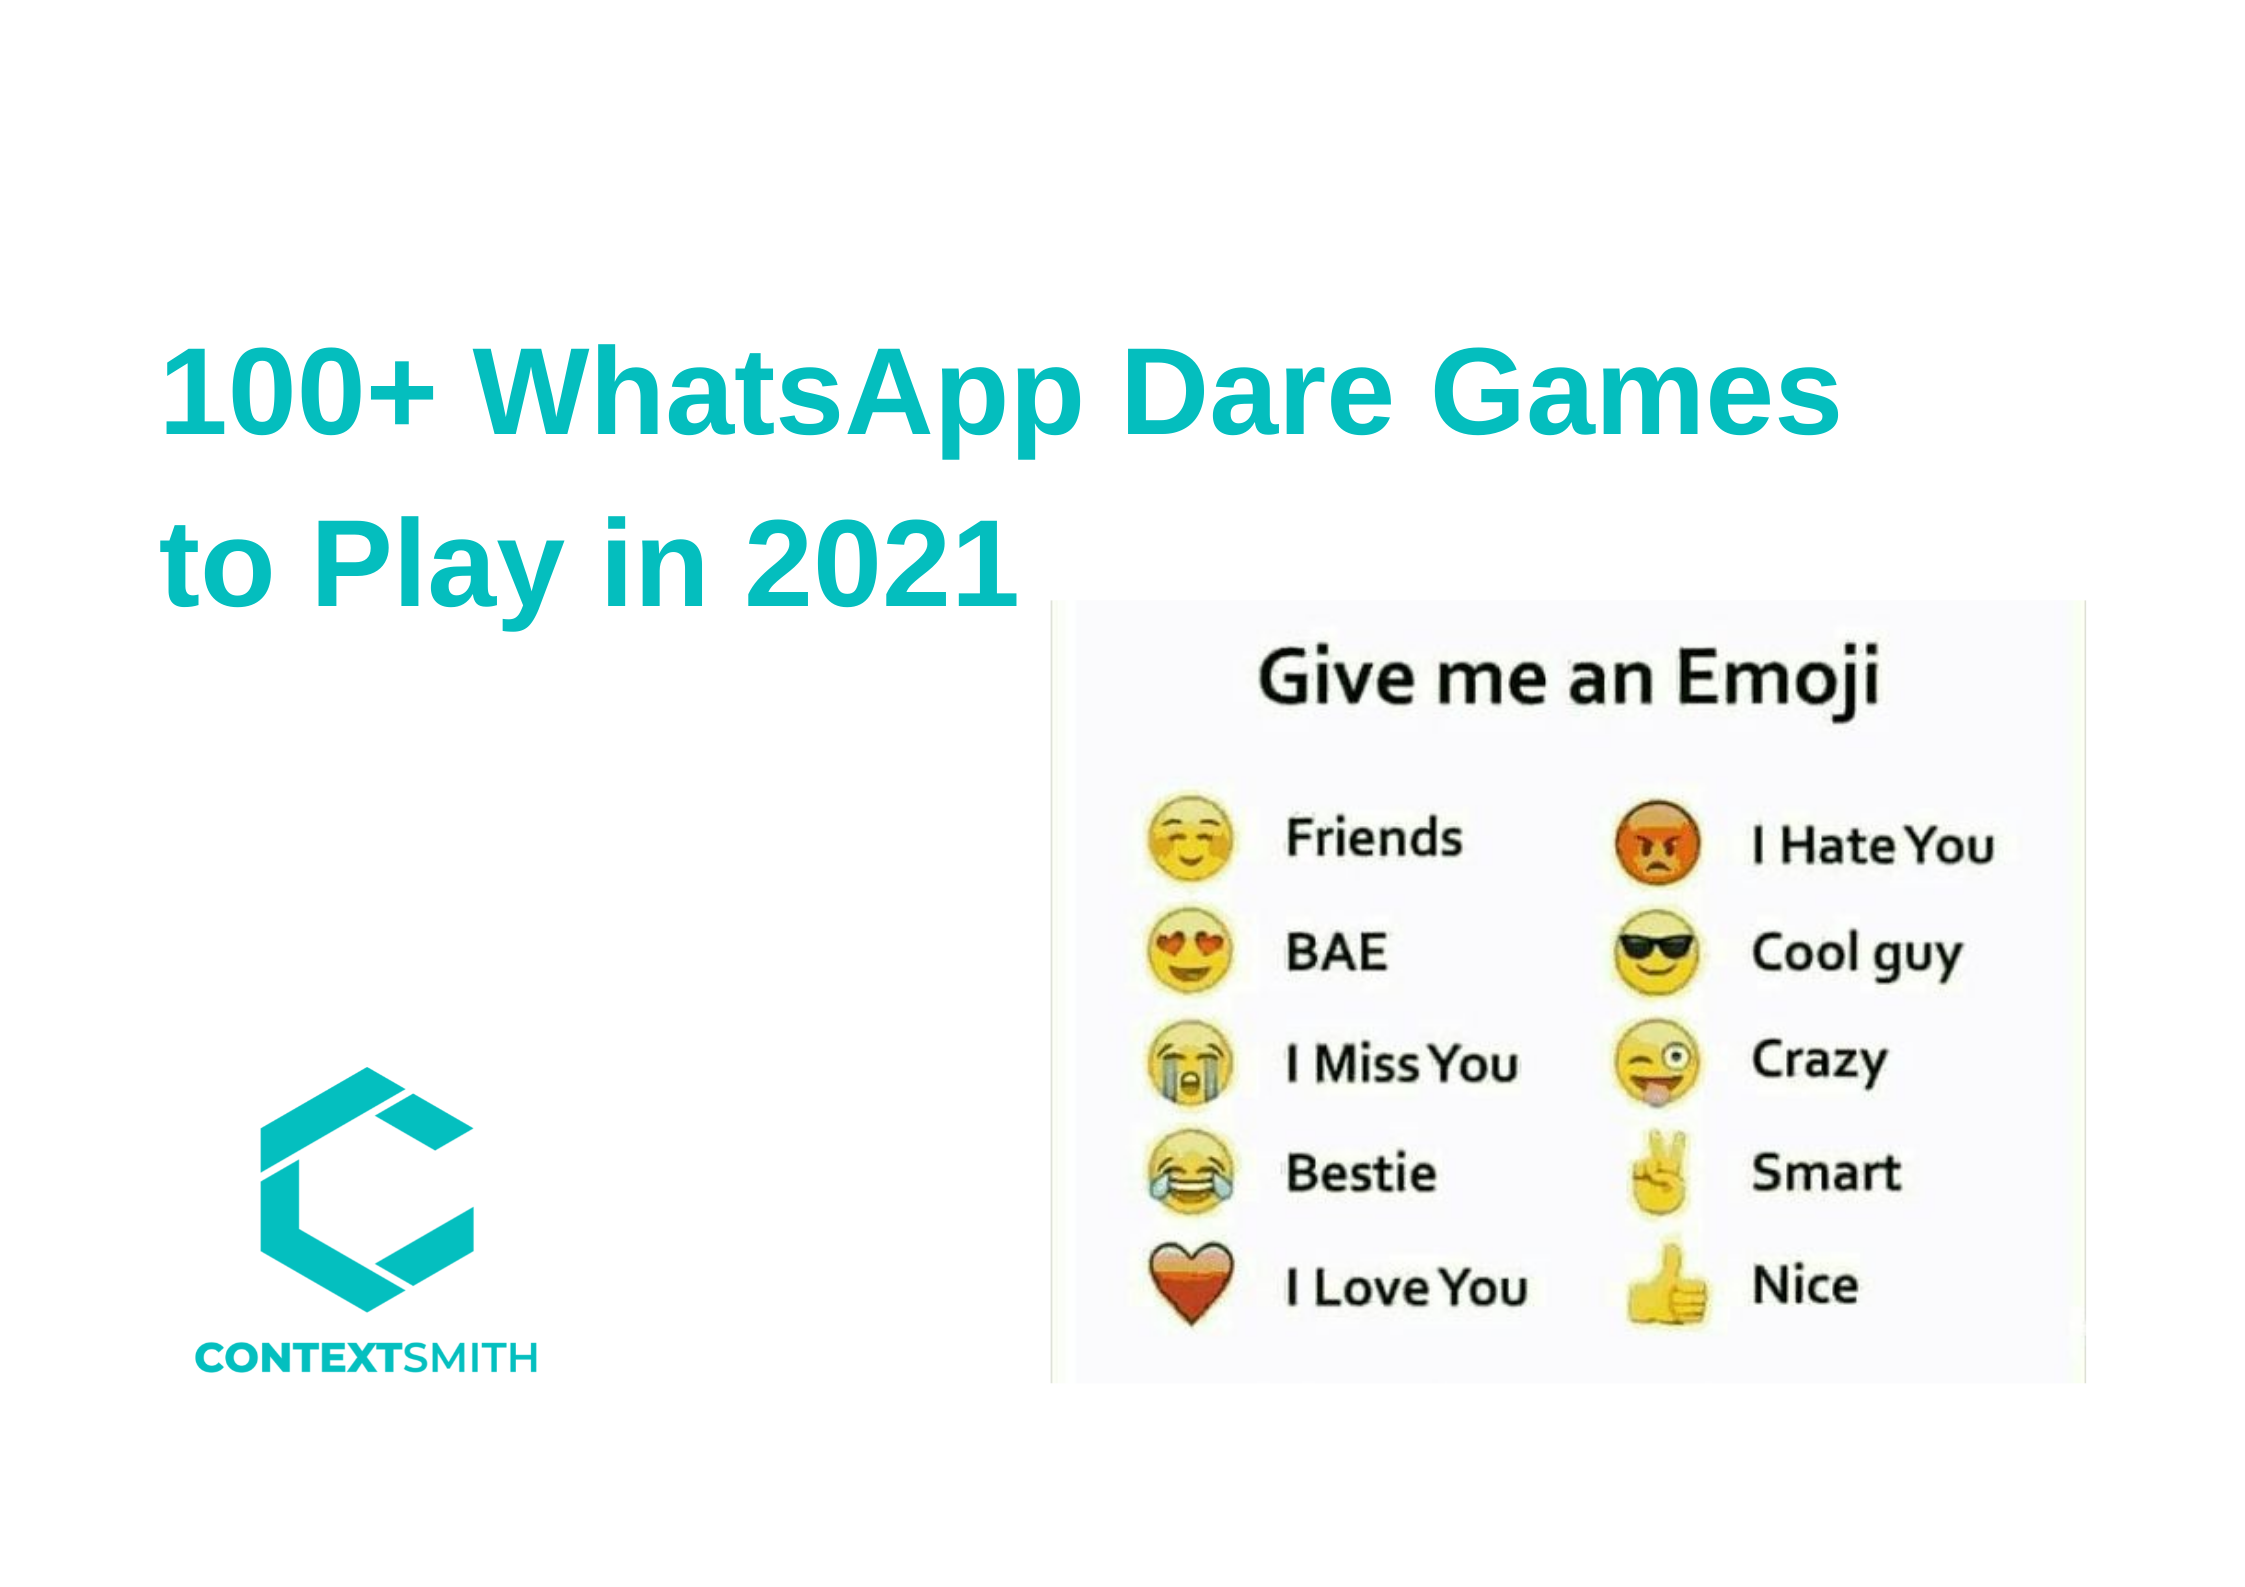 WhatsApp Games 